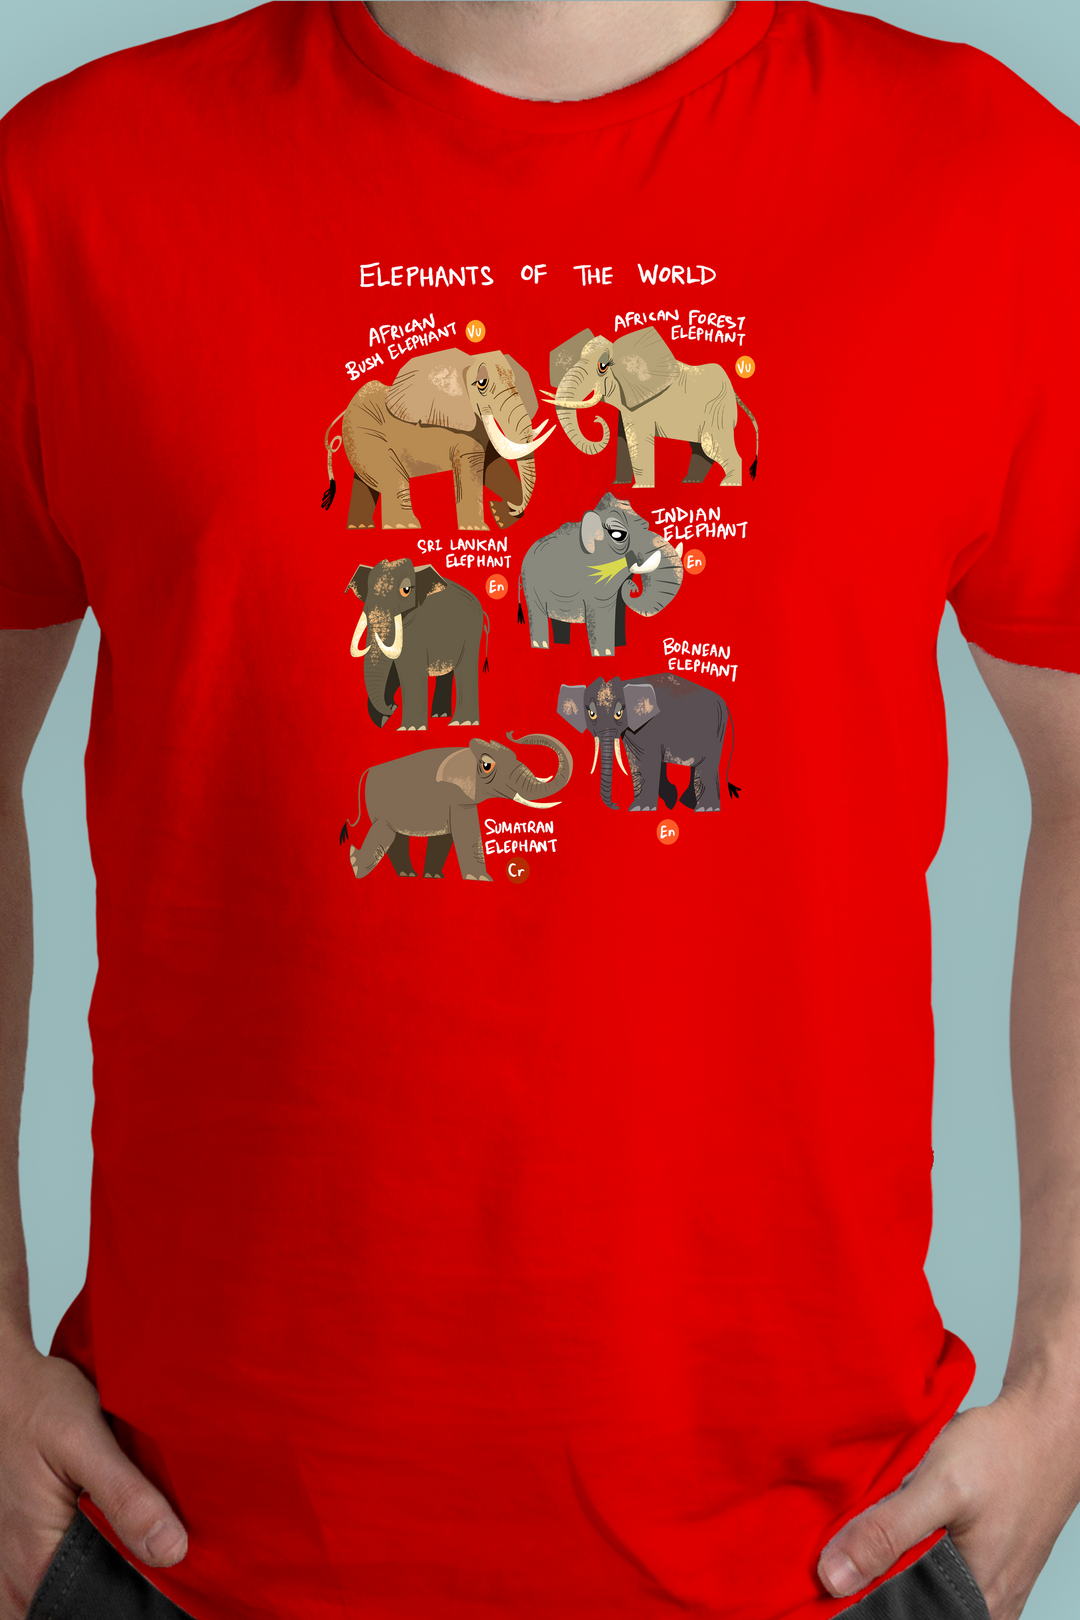 Elephants of the World (compilation) T-shirt